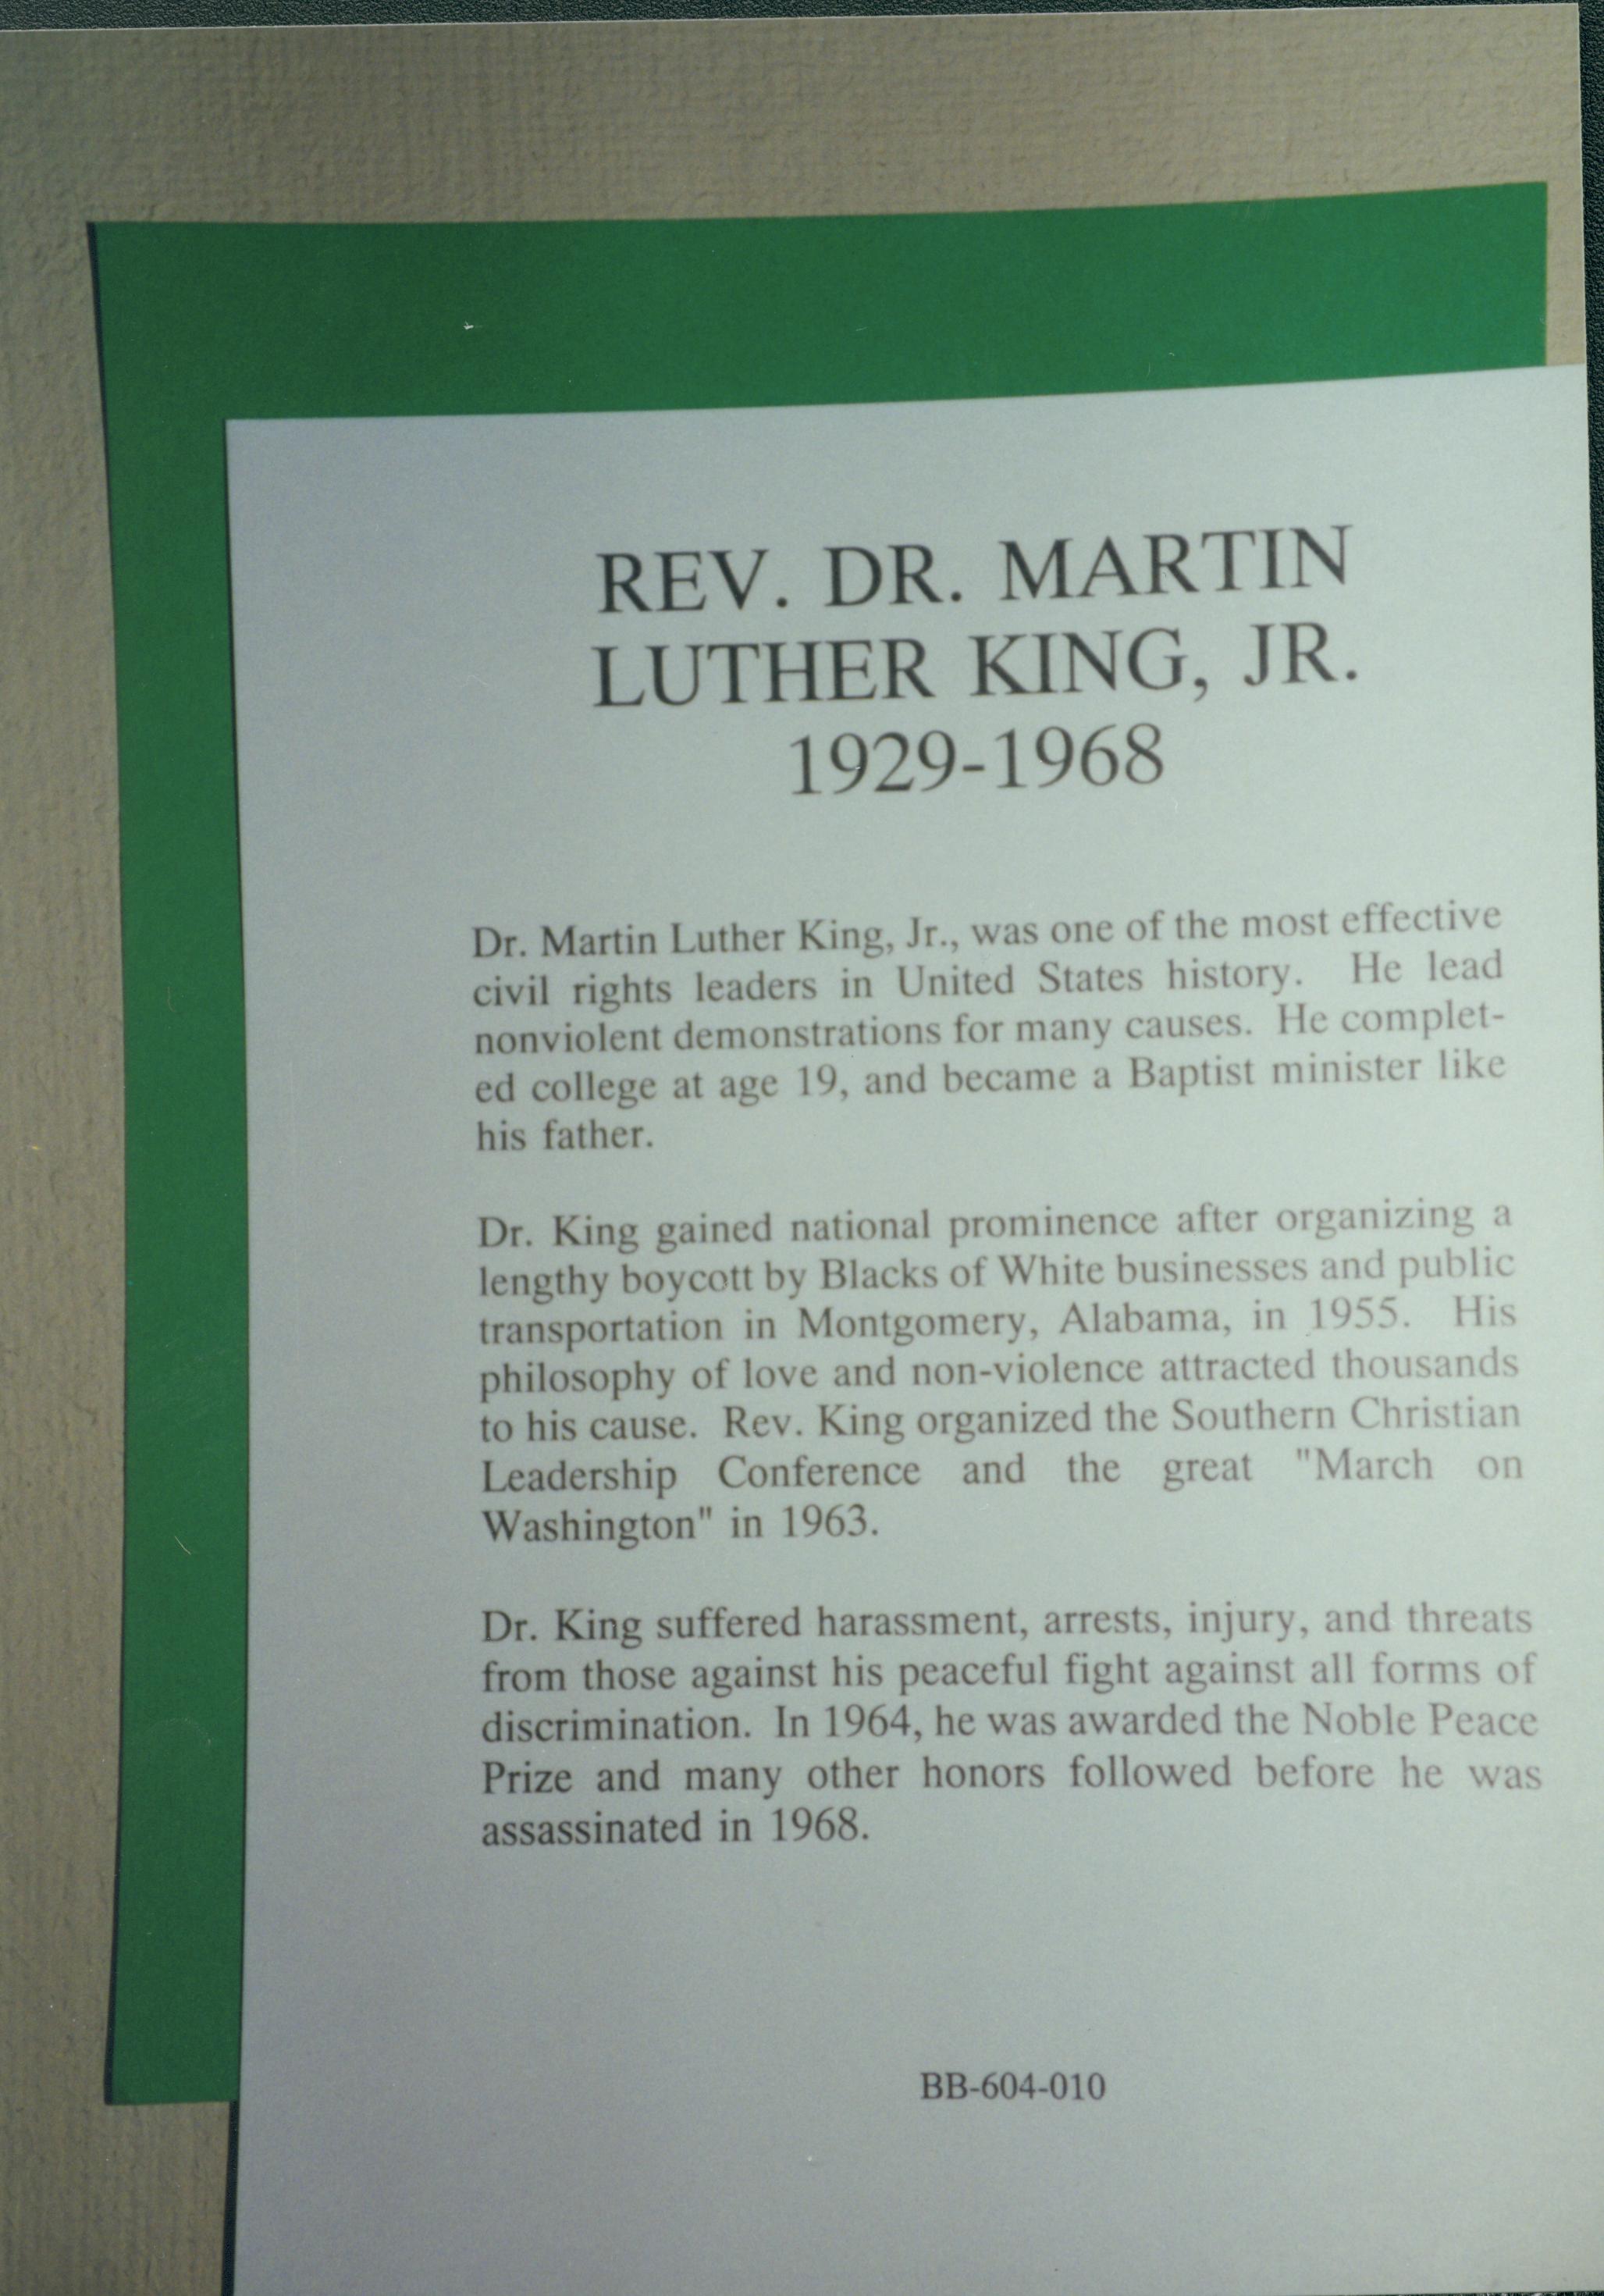 NA Lincoln Home NHS, Black History Month 1994 Dr. King, information